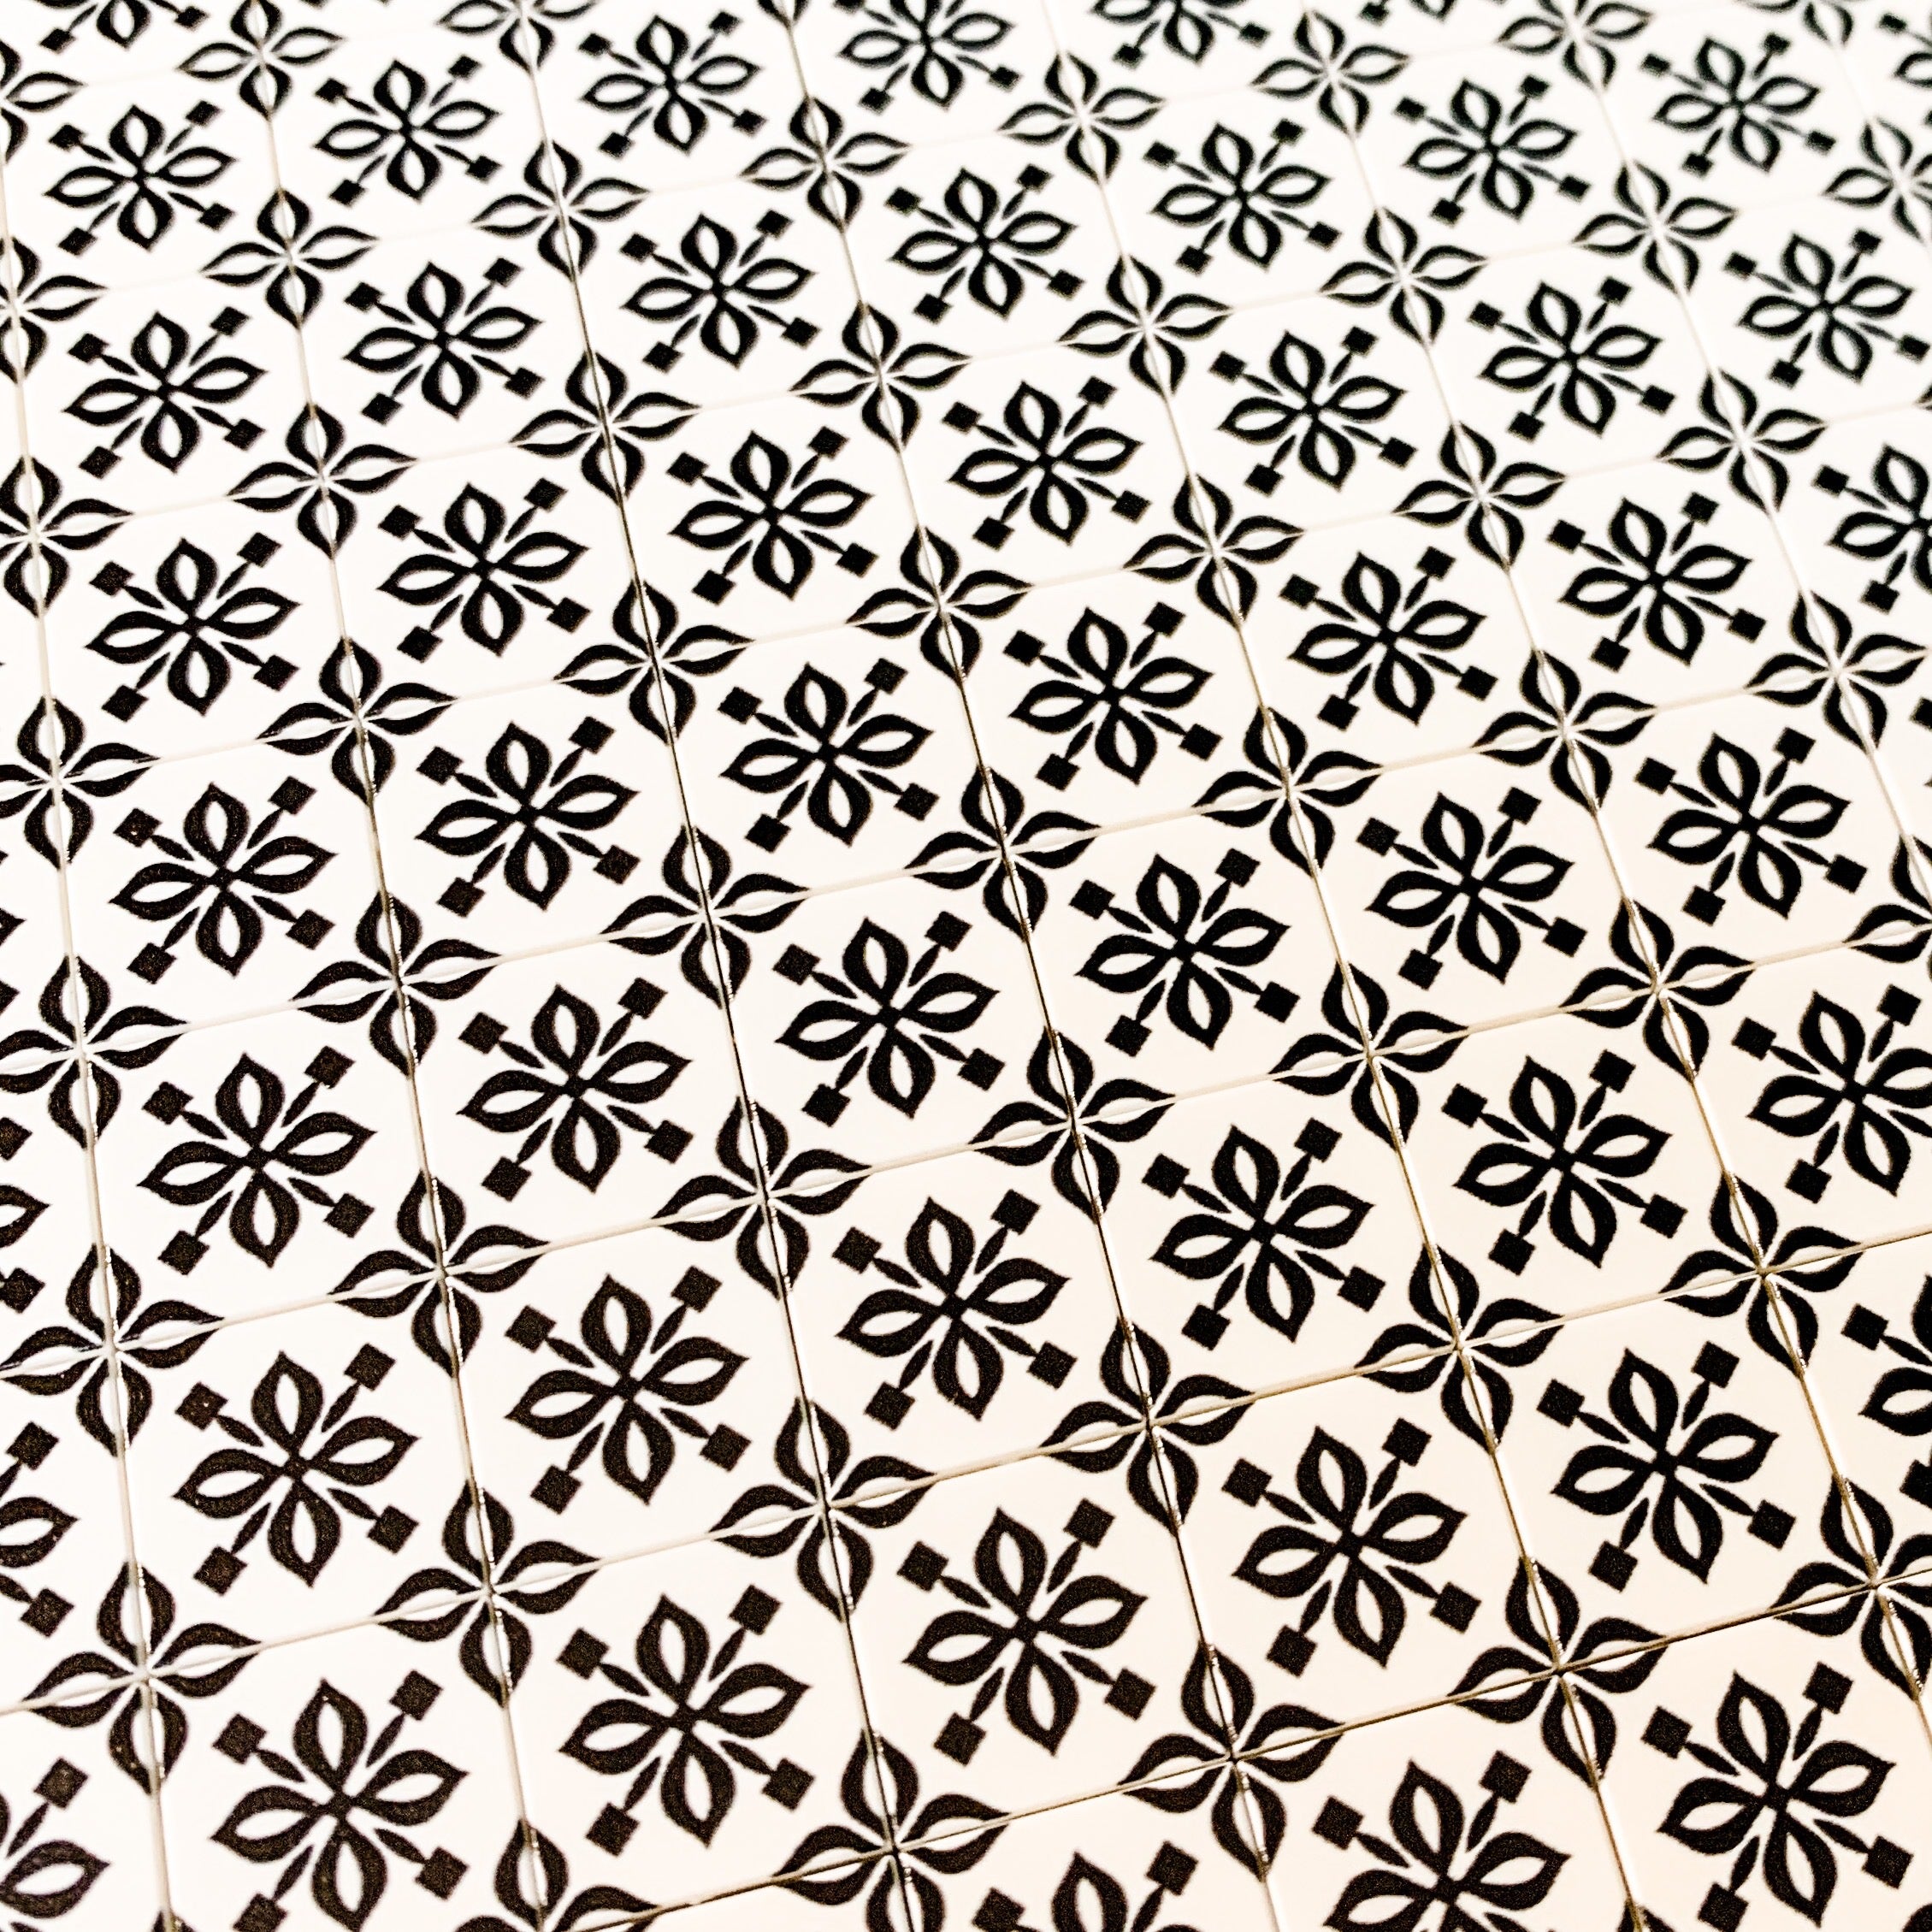 Turkish Kitchen Flooring / Wallpaper #1 - B3 Customs® Printed 2x2 Tile